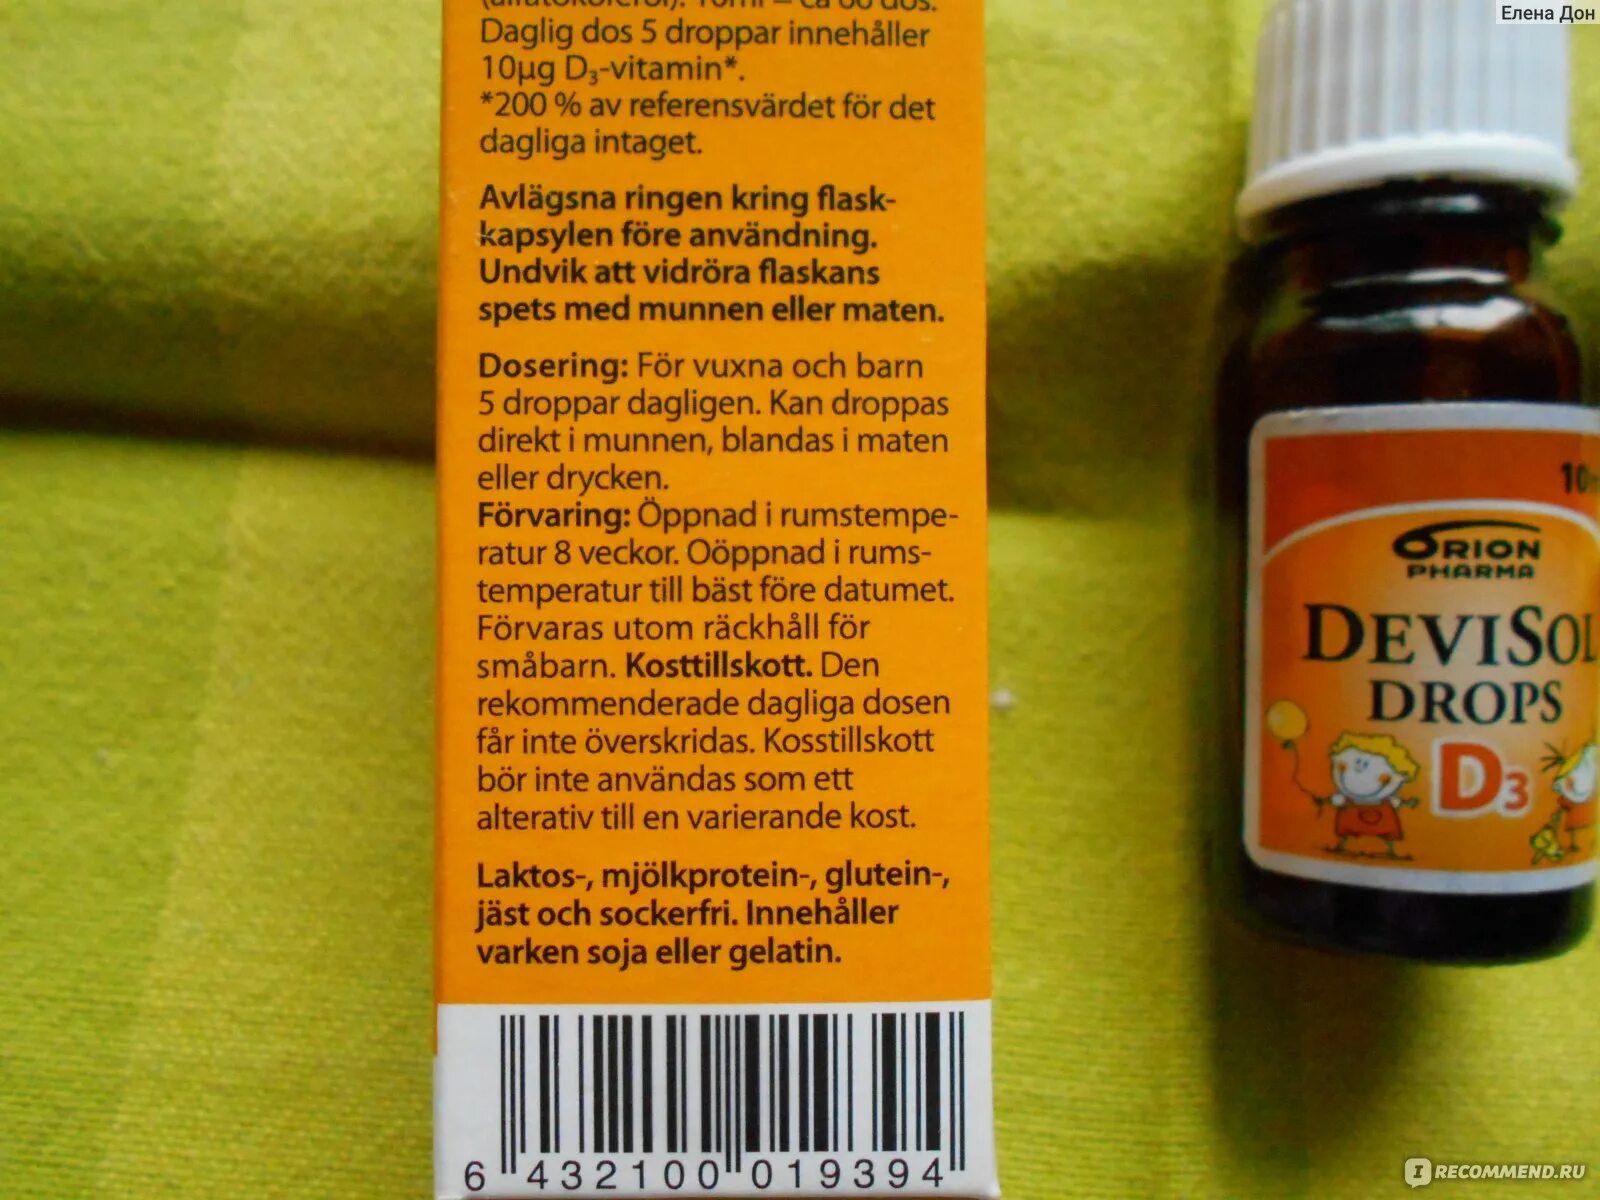 Витамин Devisol Drops d3. Финские капли д3 Devisol Drops дозировка. Дропс витамин д3 для детей. Финский витамин д3 Devisol дозировка.